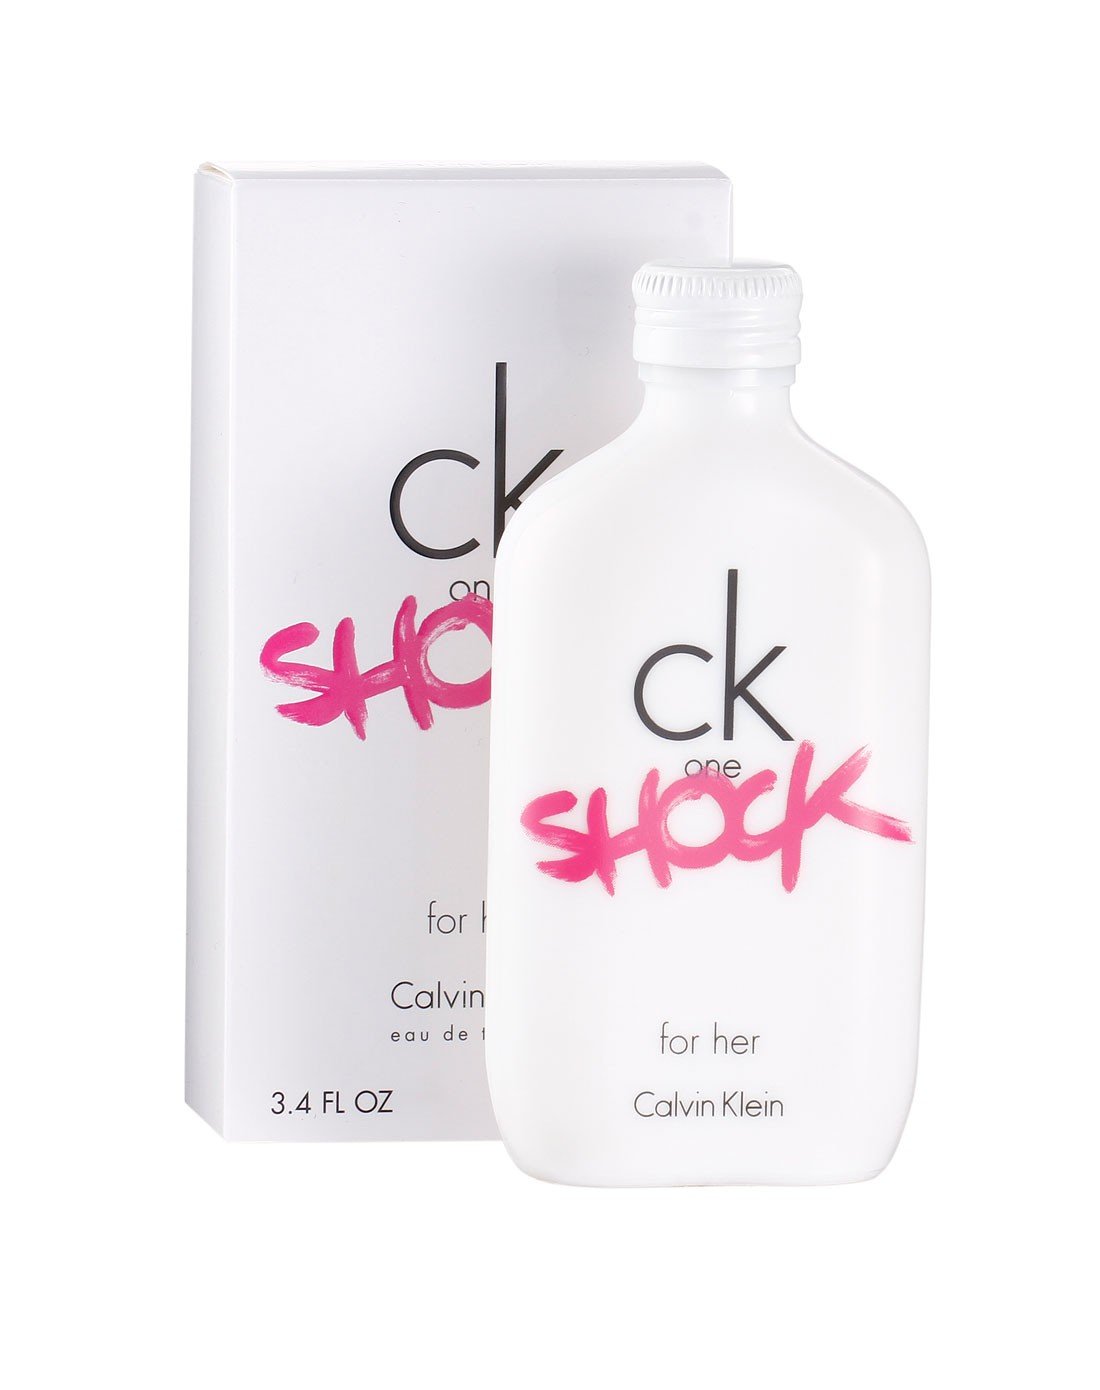 CALVIN KLEIN - CK One Shock para mujer / 100 ml Eau De Toilette Spray